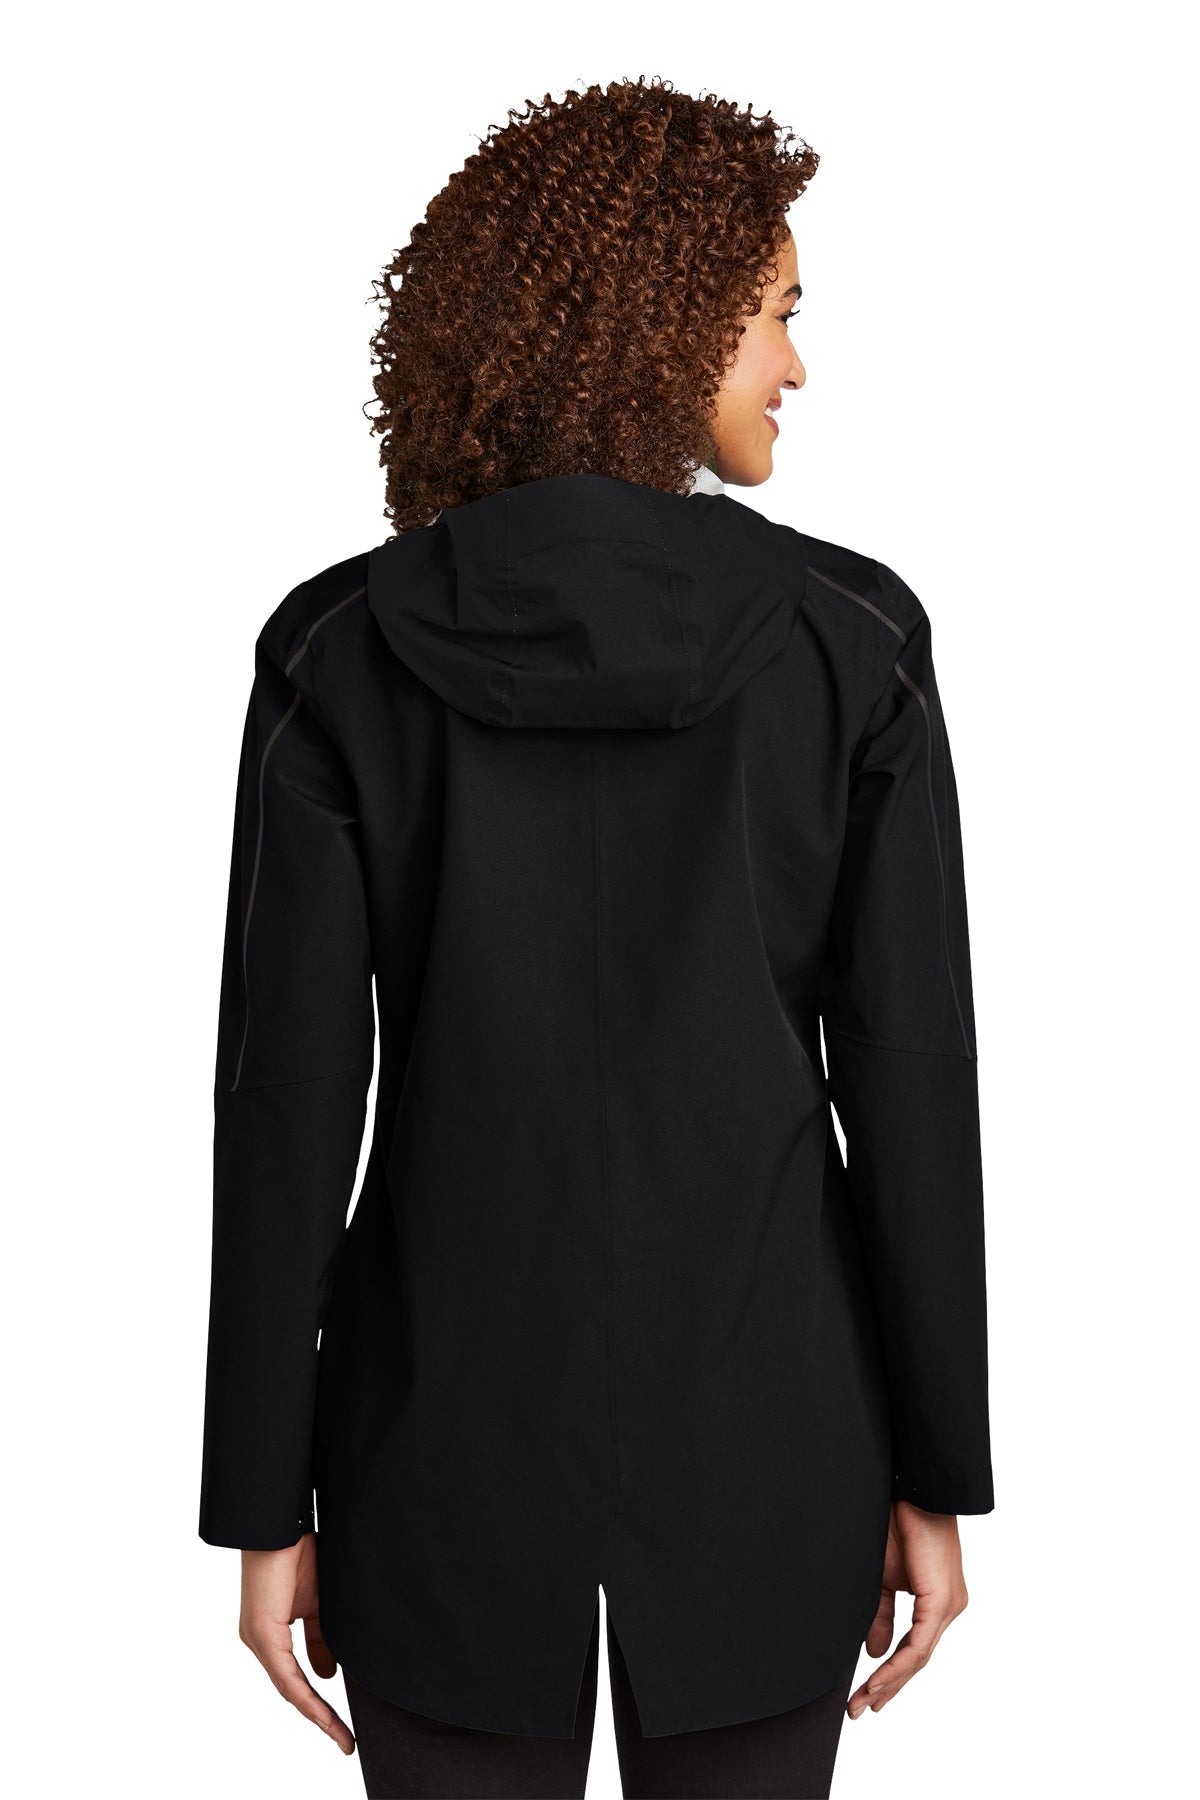 OGIO Ladies Utilitarian Custom Jackets, Blacktop